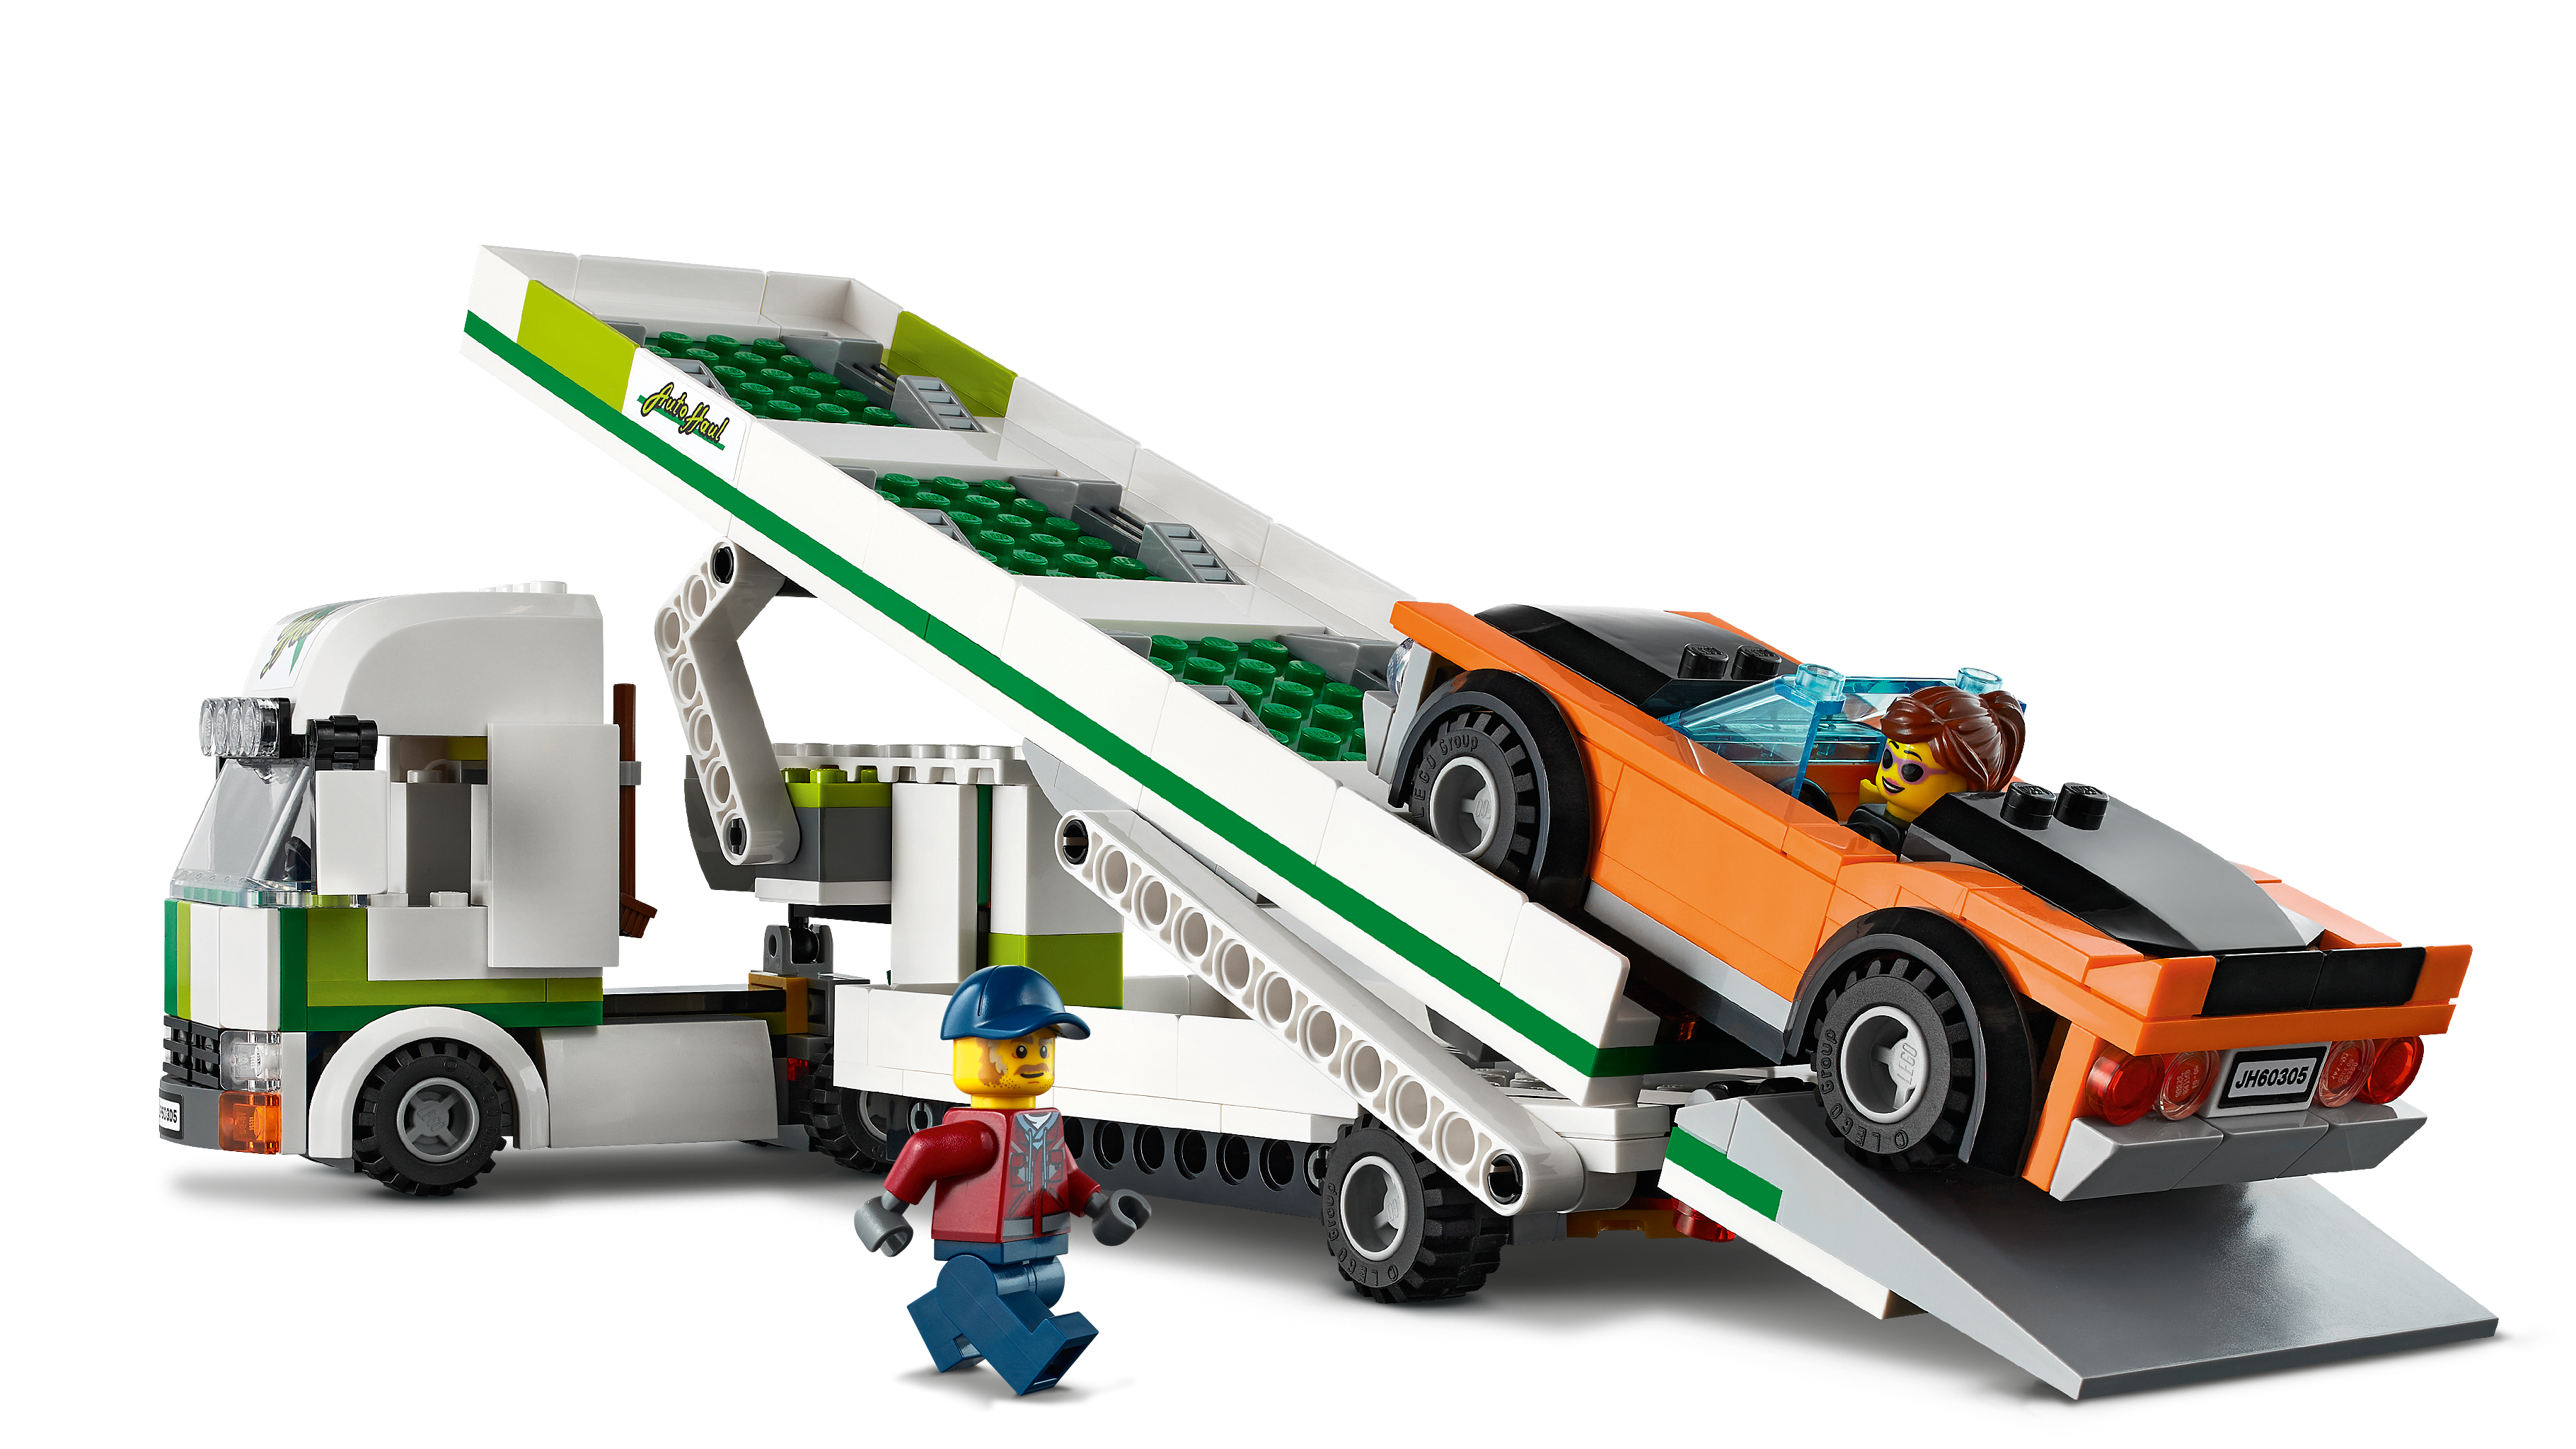 9x Male Truck Driver CTY1284 60305 LEGO Minifigure Figure New Ref:D281 